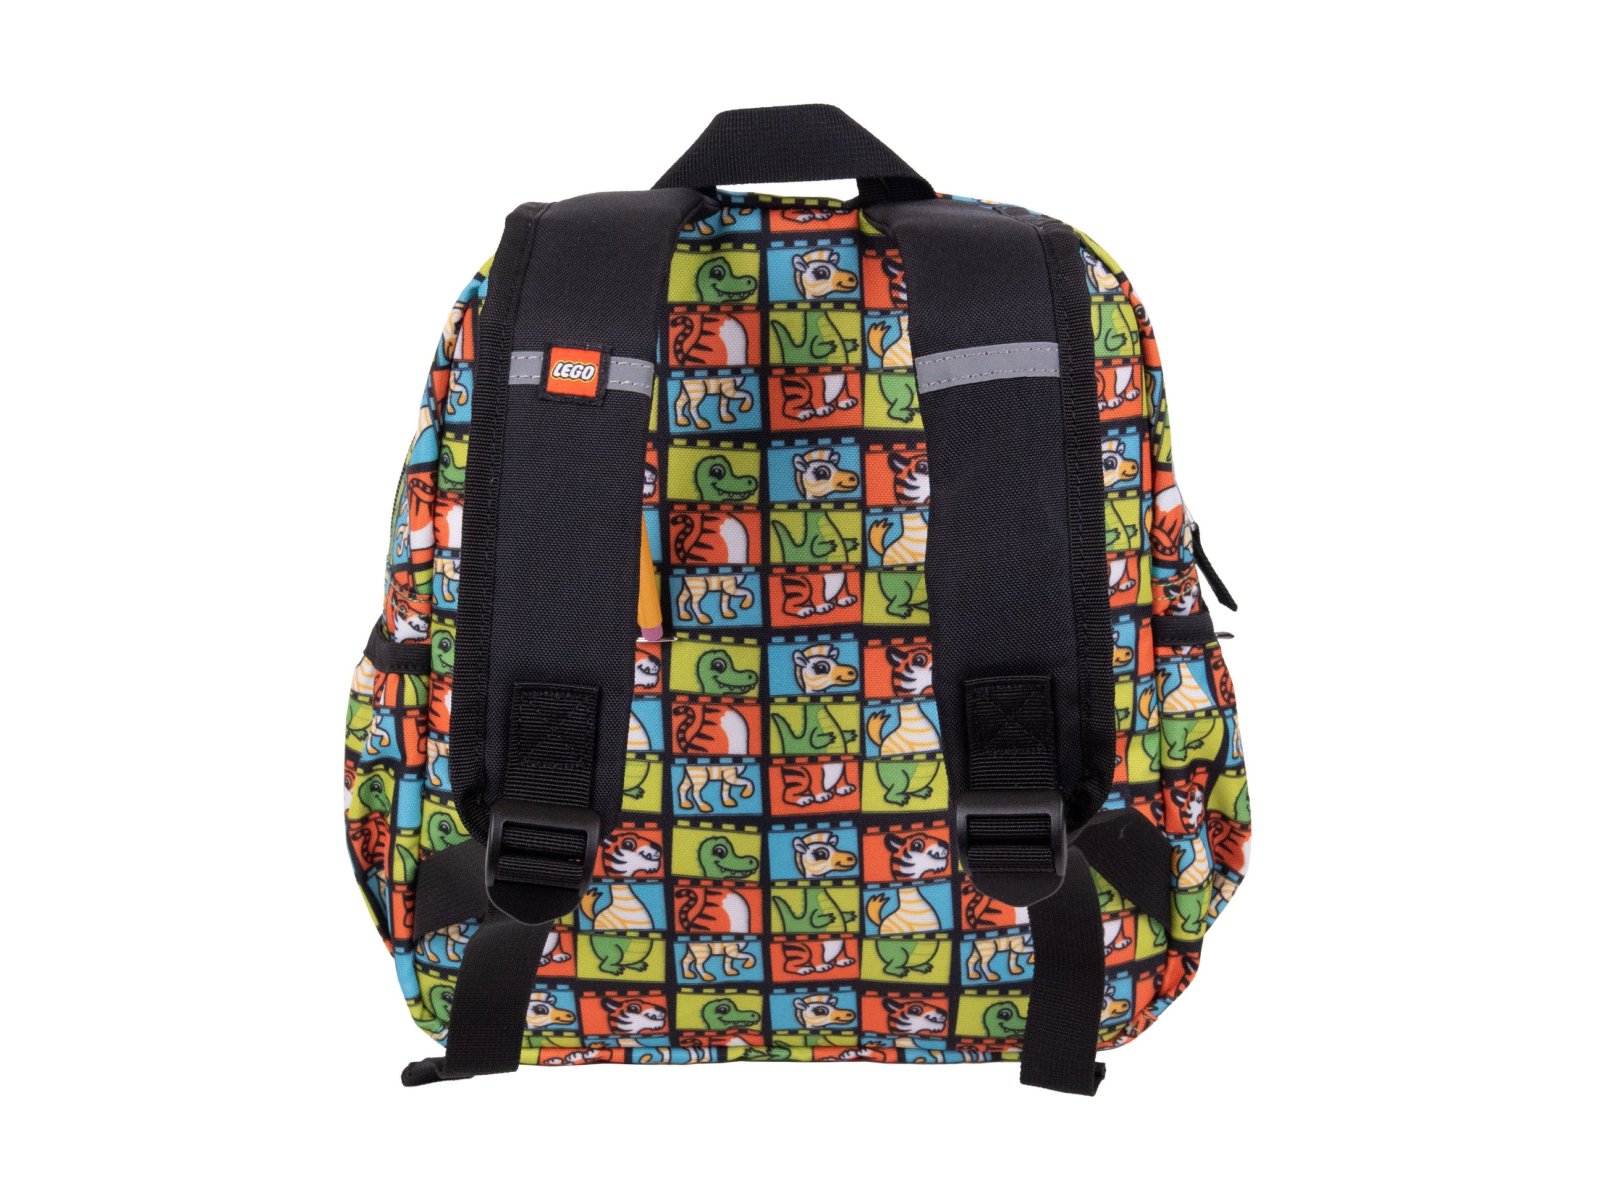 LEGO 5007544 Cytrusowy plecak w stylu klocka